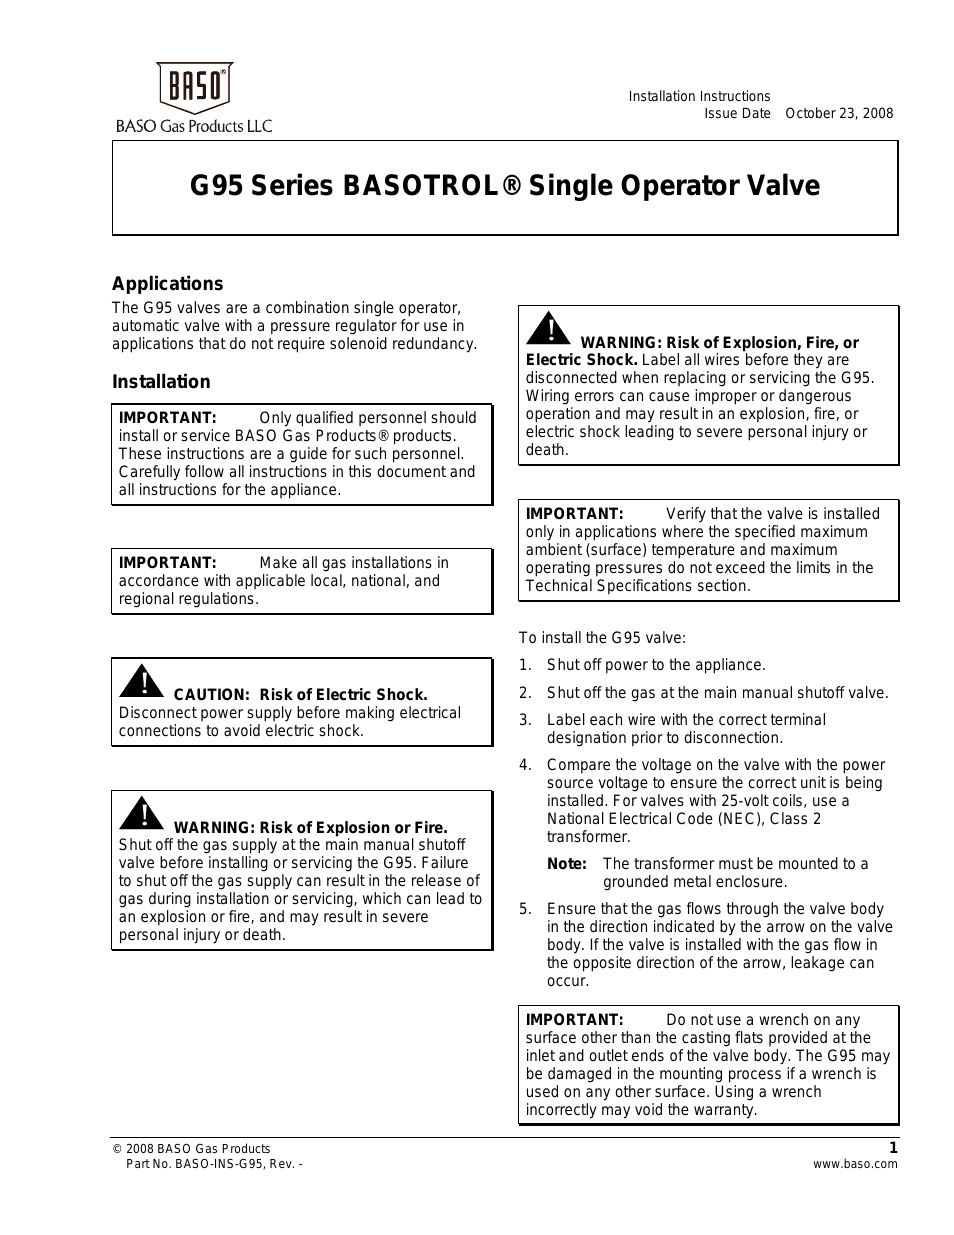 G95 Series Single Operator Valve